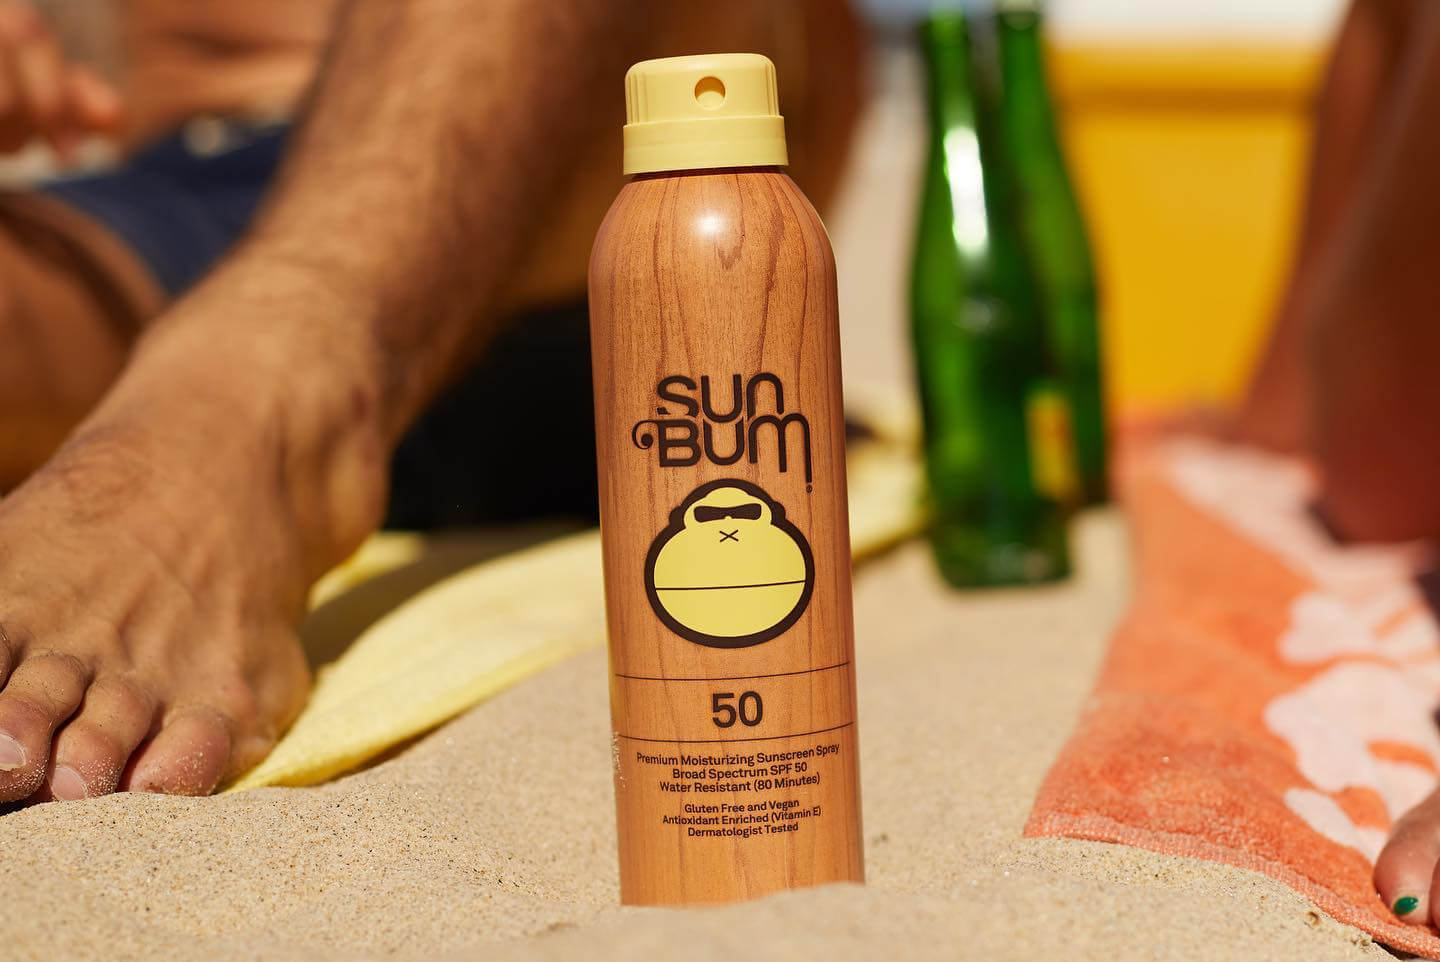 Sun Bum Product